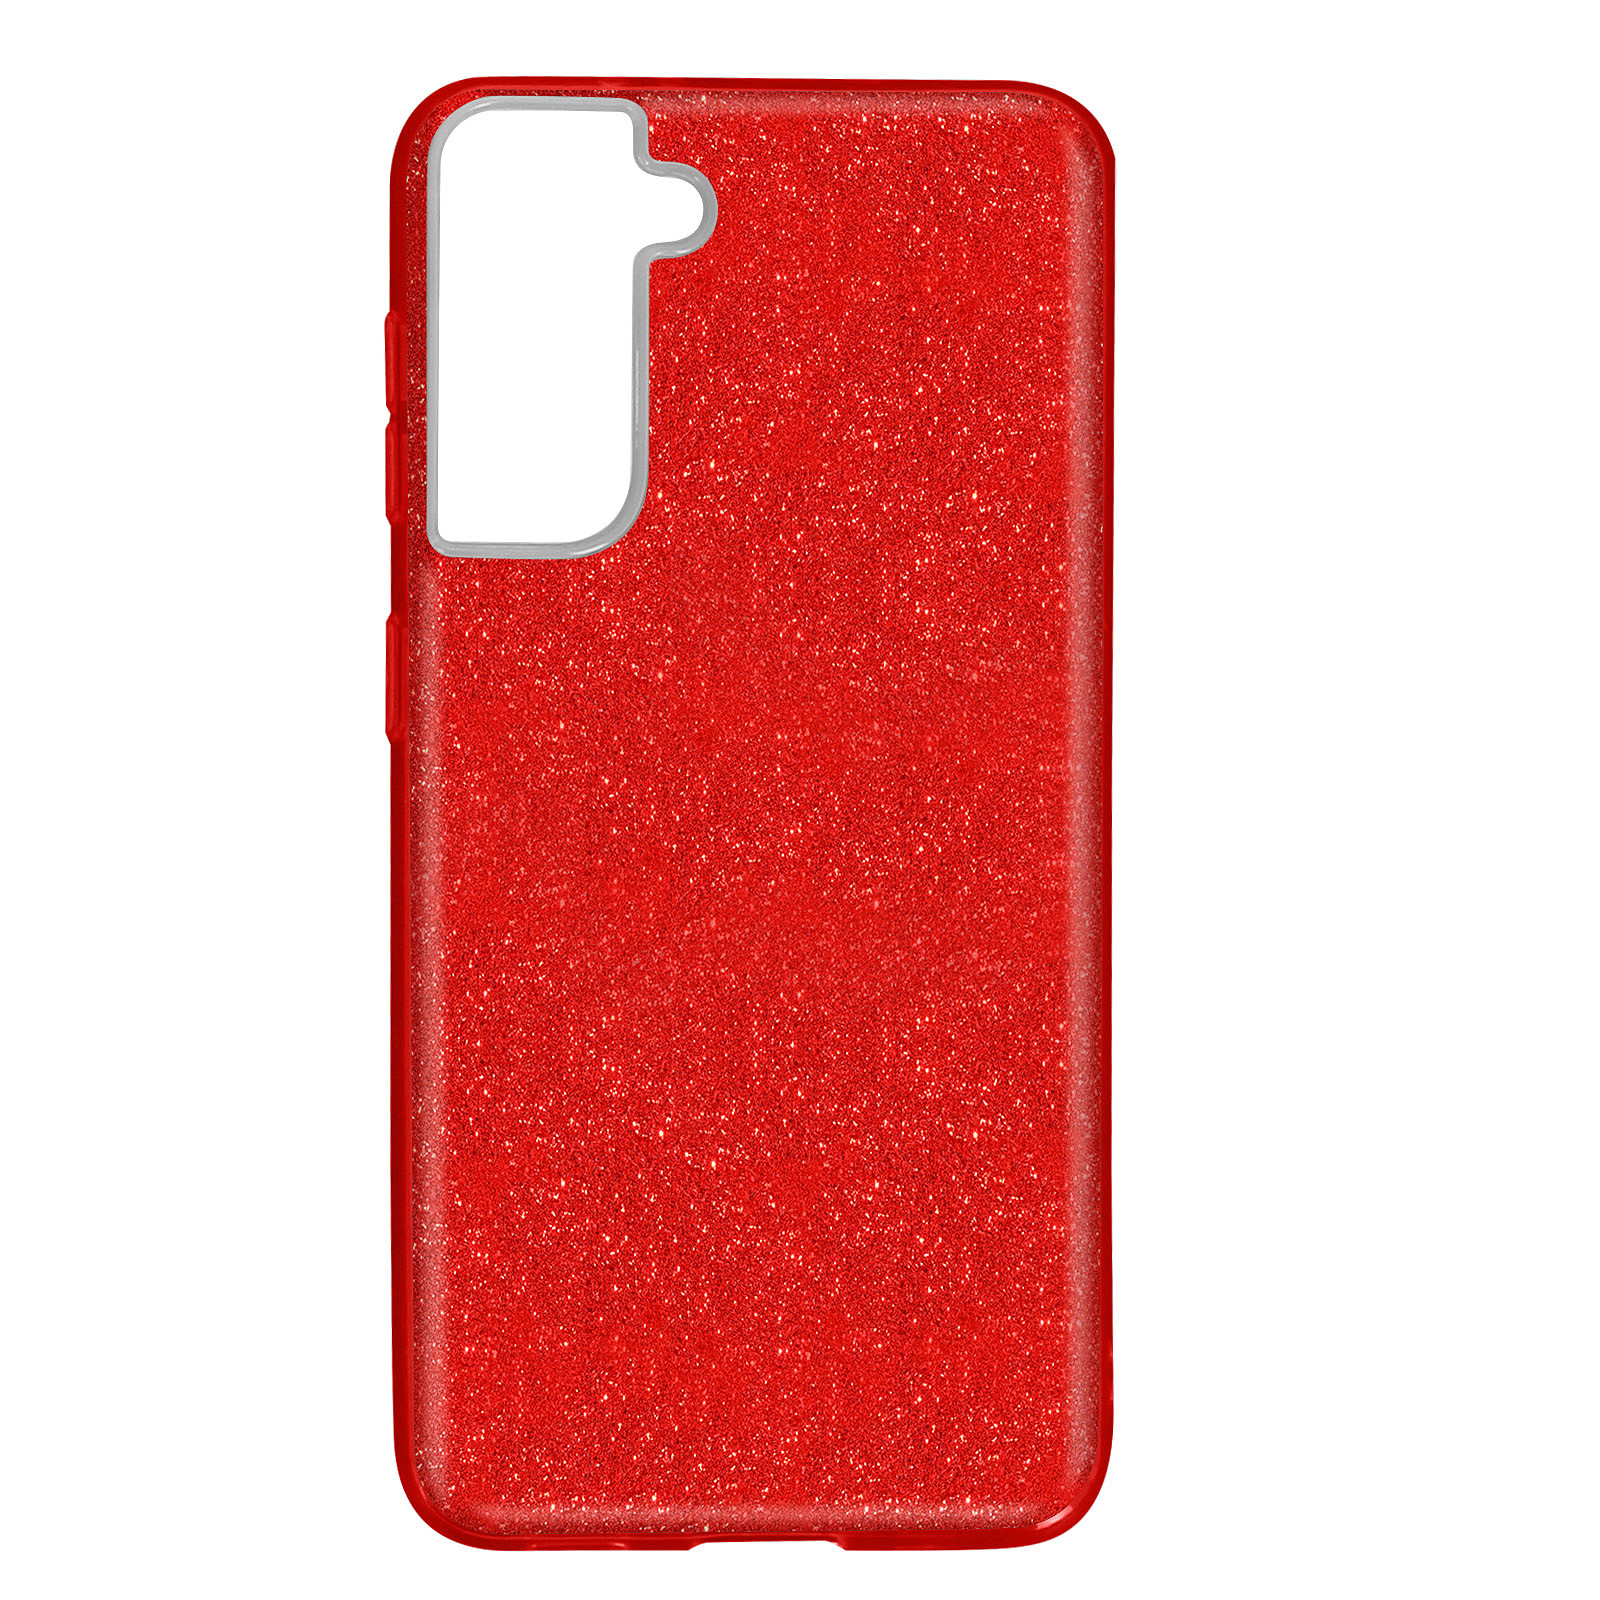 Avizar Coque pour Samsung Galaxy S21 Plus Design Paillette Amovible Silicone Rouge - Coque telephone Avizar